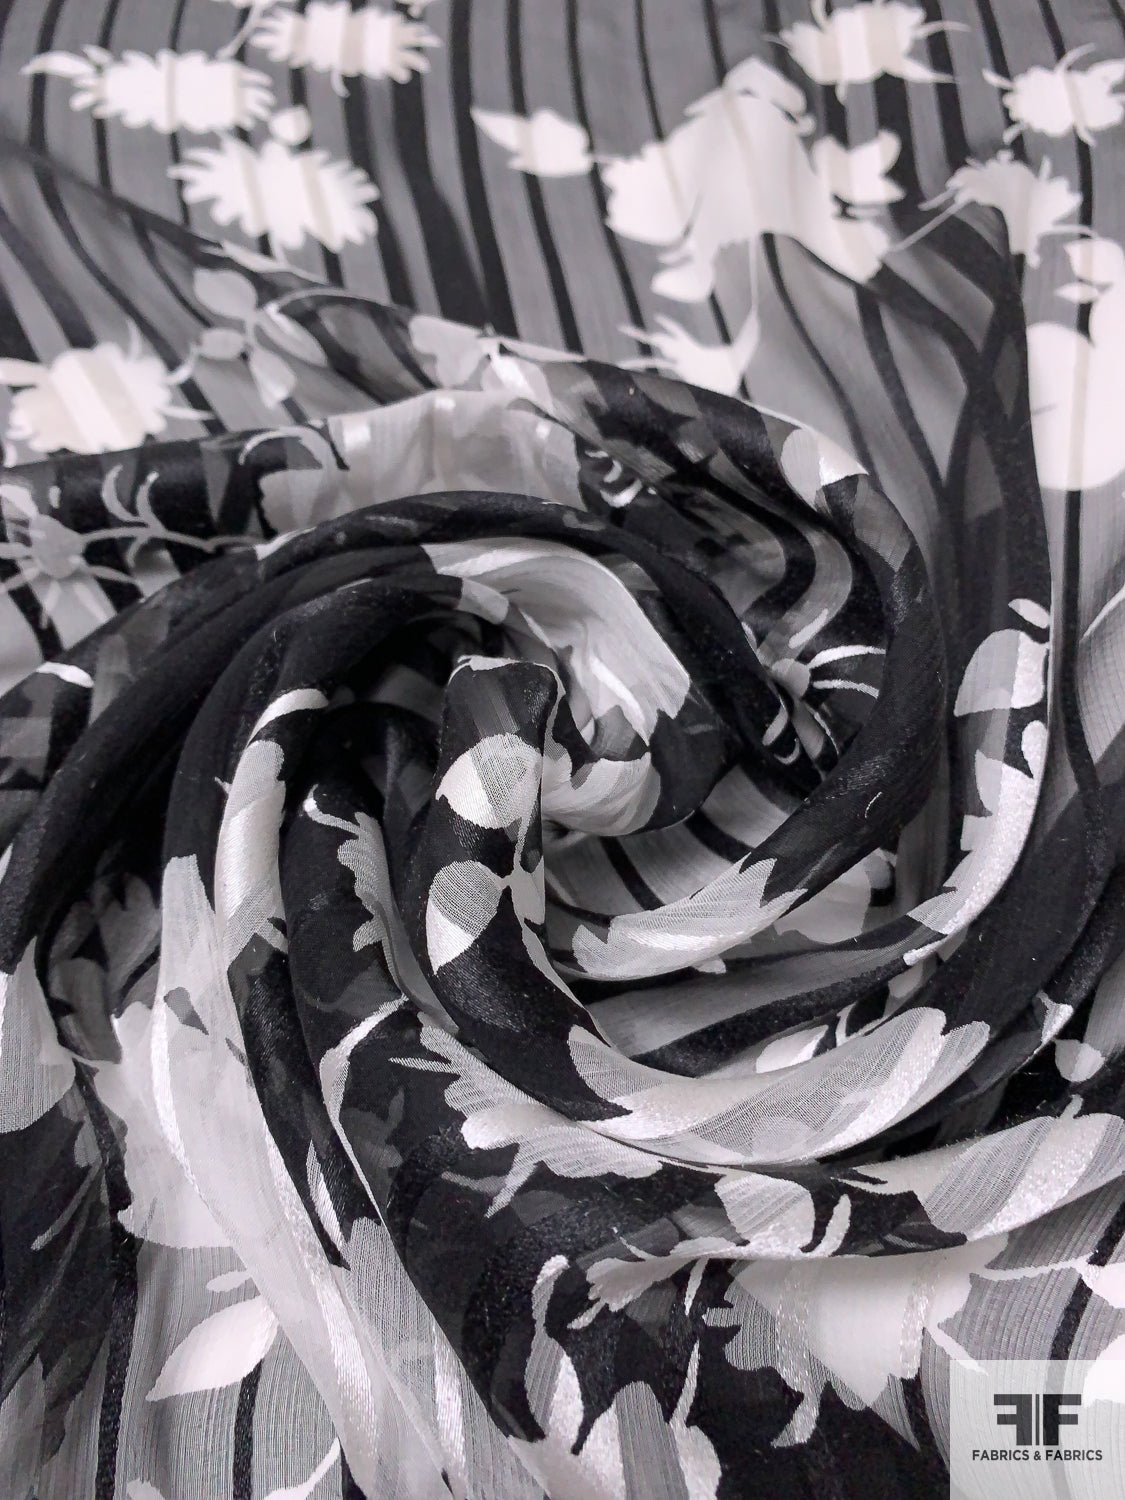 Floral Silhouette Printed Silk Chiffon - Black / White  Black and white  fabric, Silk printing, Black and white